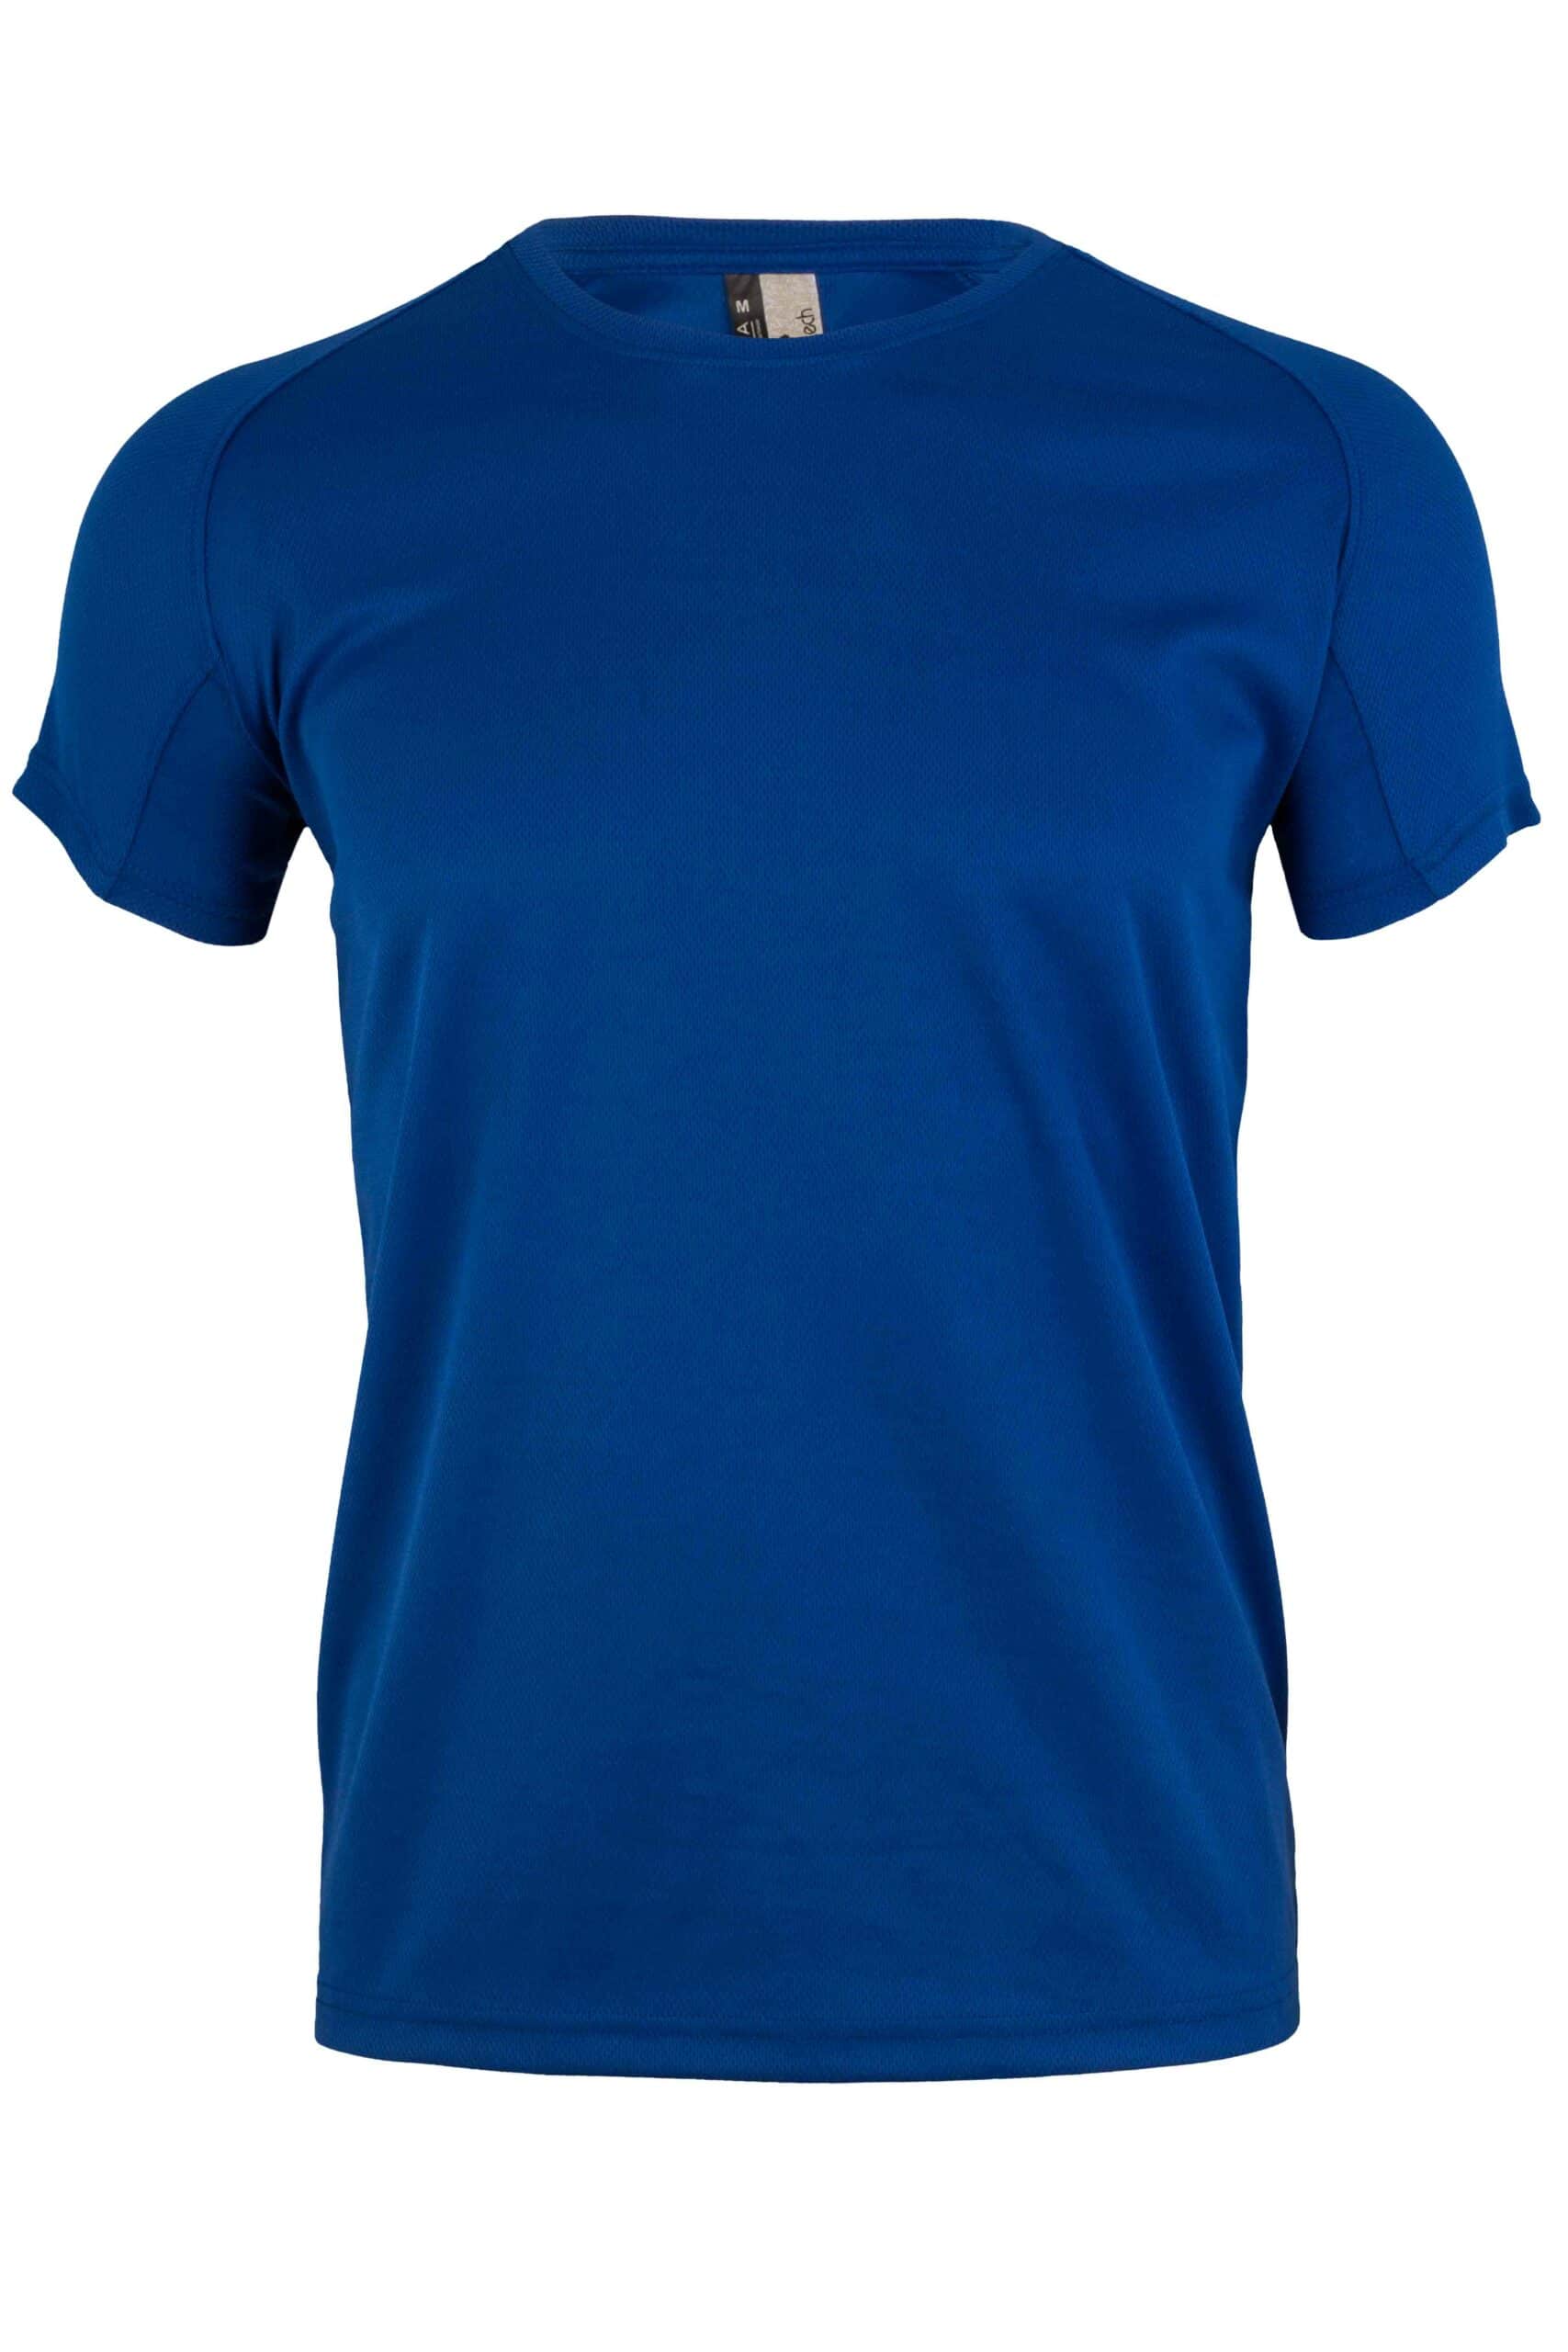 Mukua Mk521v Camiseta TÉcnica Manga Corta NiÑo Royal Blue